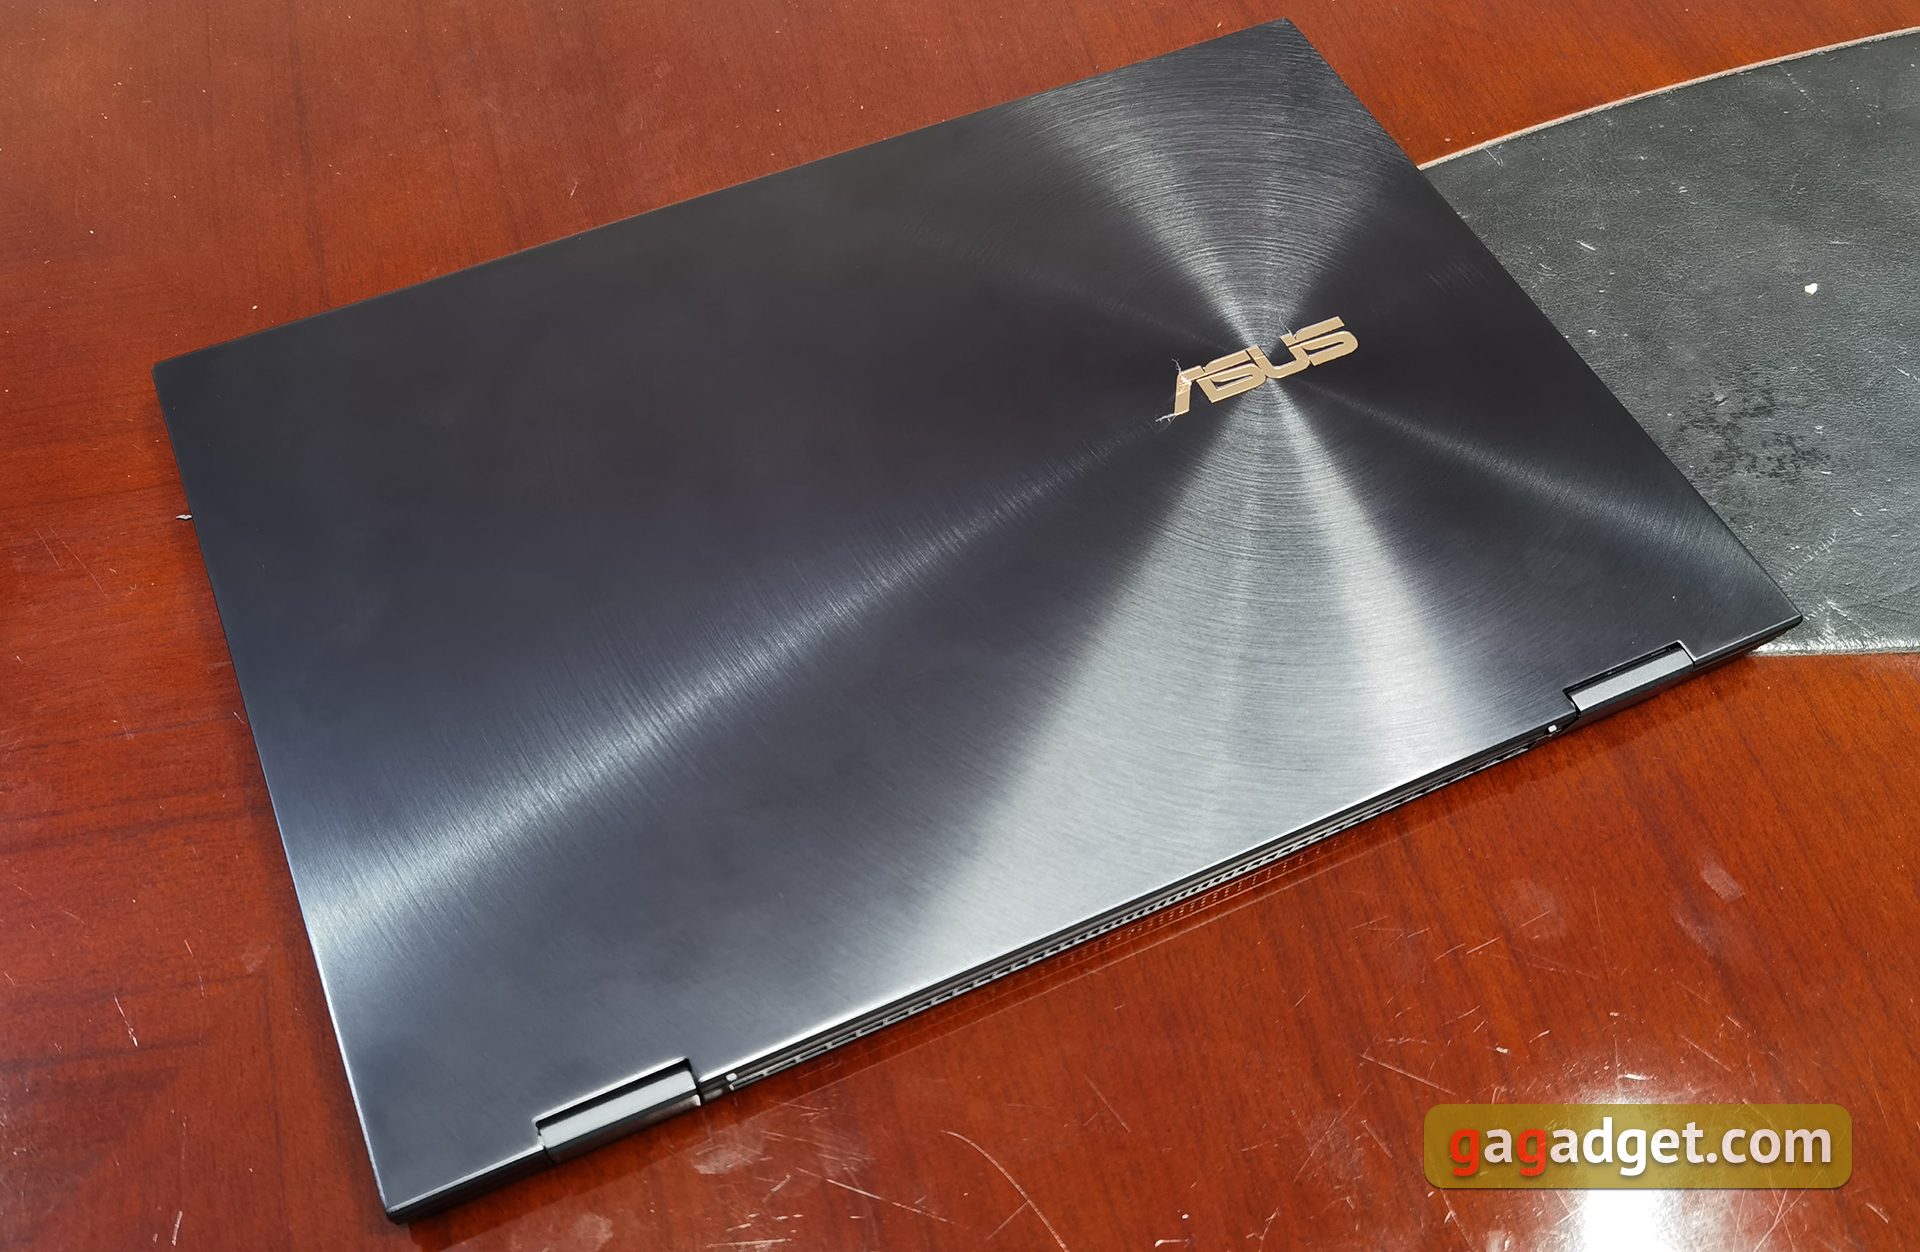 4K OLED-дисплей и процессор Intel семейства Tiger Lake. ASUS ZenBook Flip S (UX371) своими глазами-5